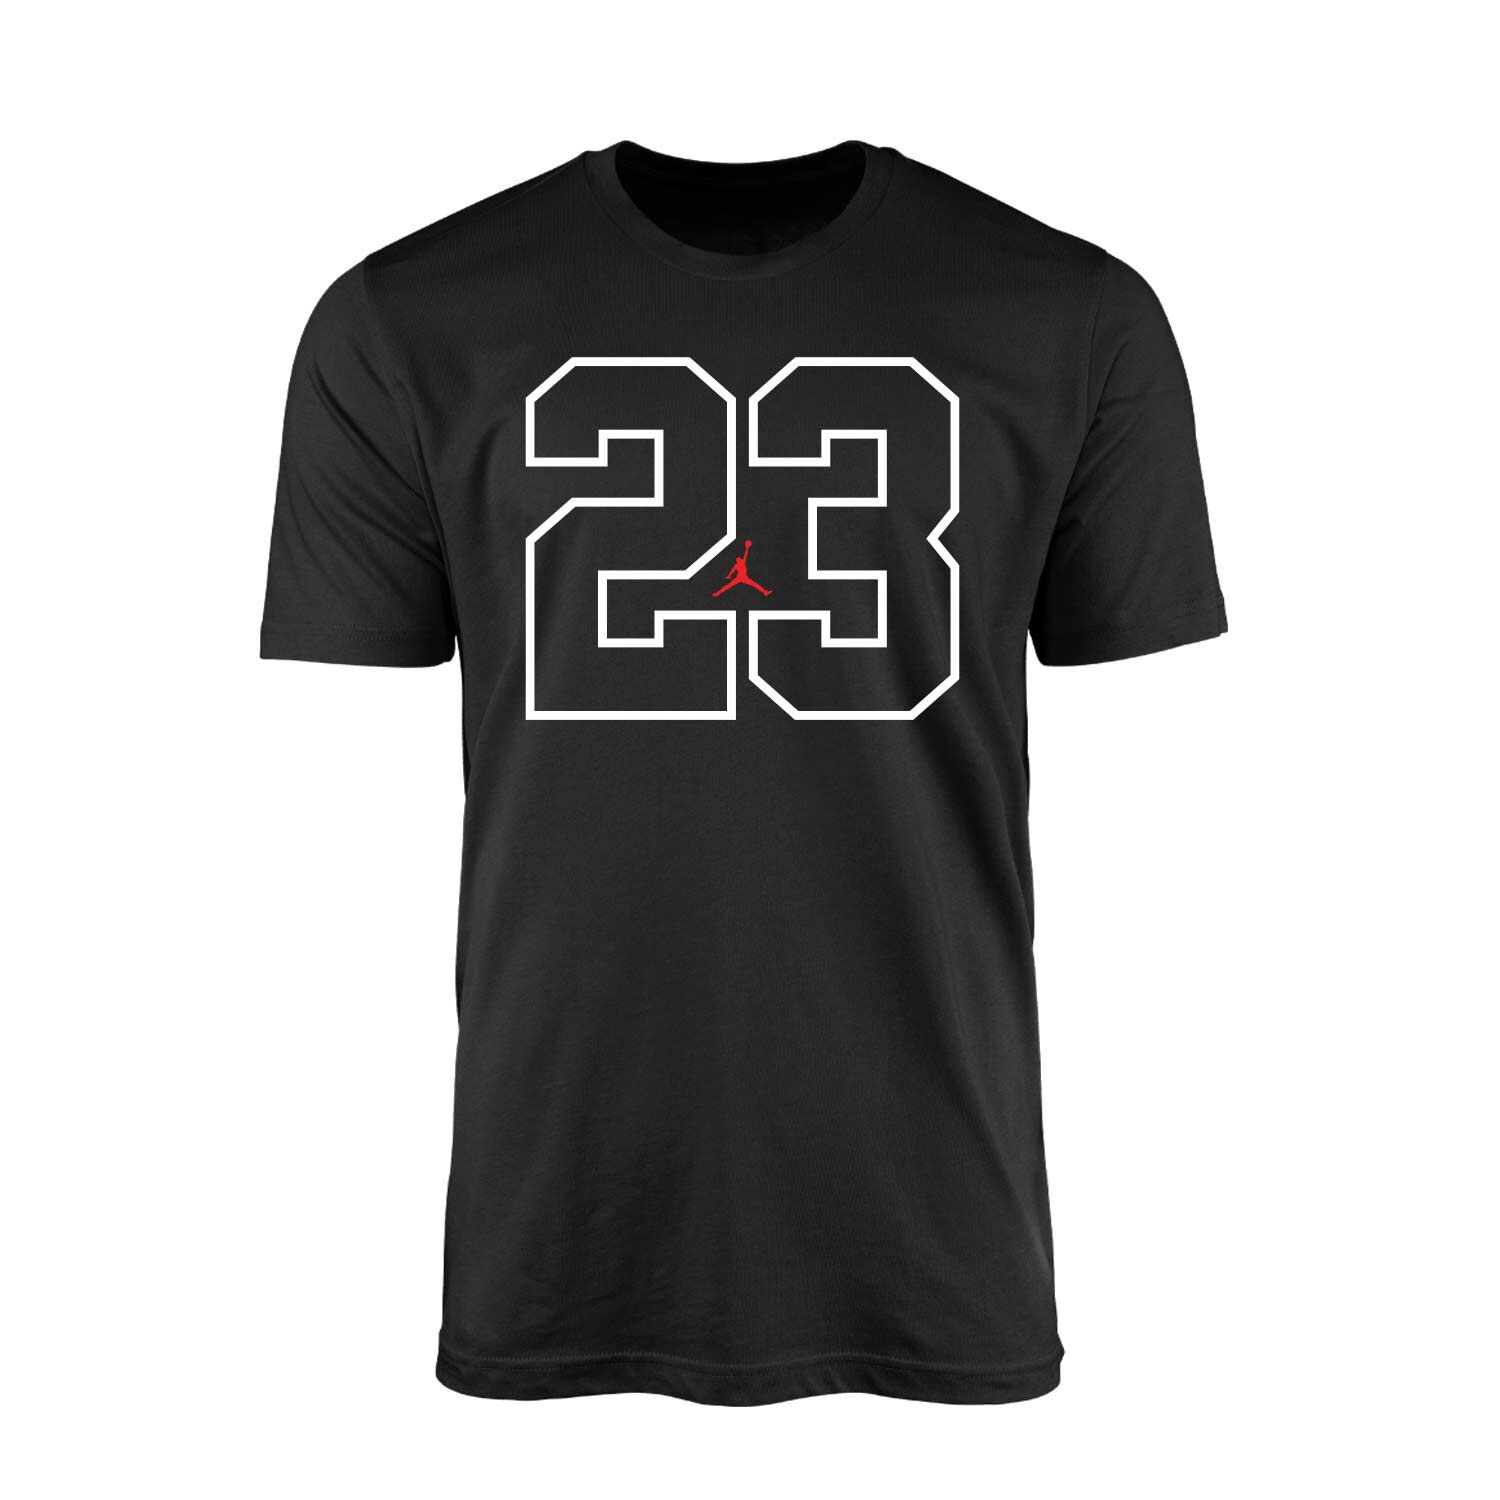 The 23 Air Jordan Siyah Tişört